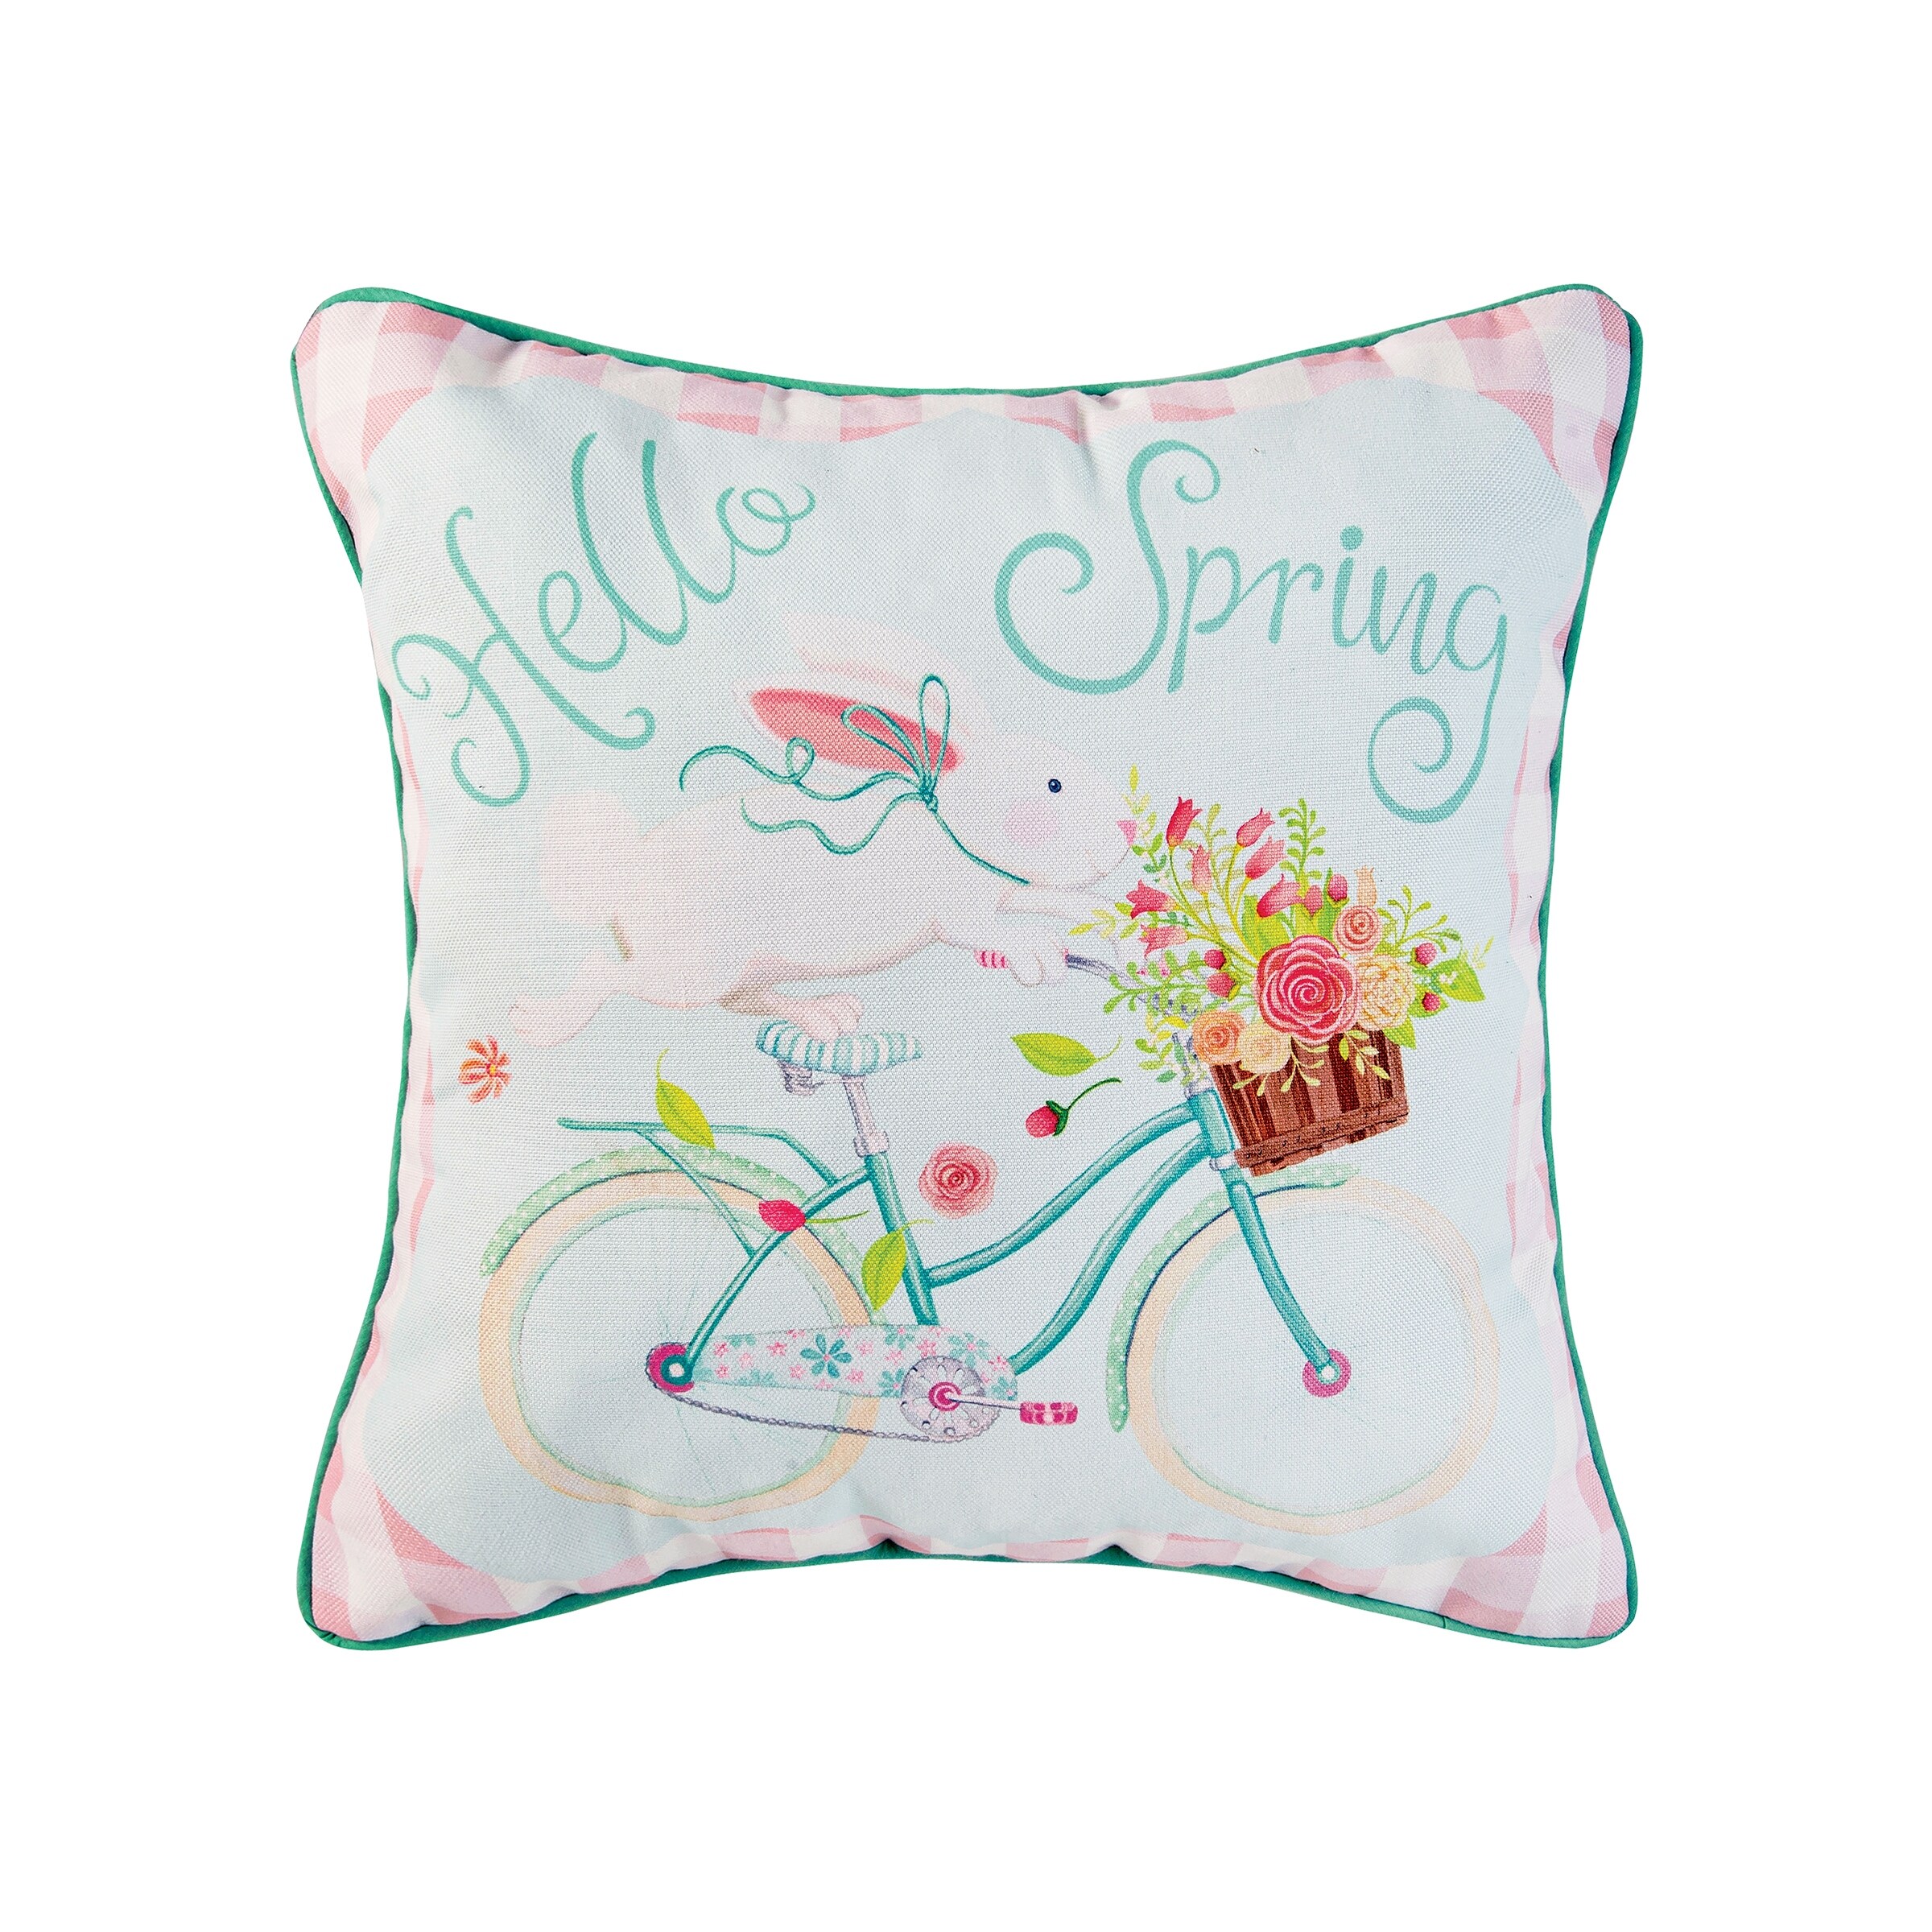 Decorative spring pillow